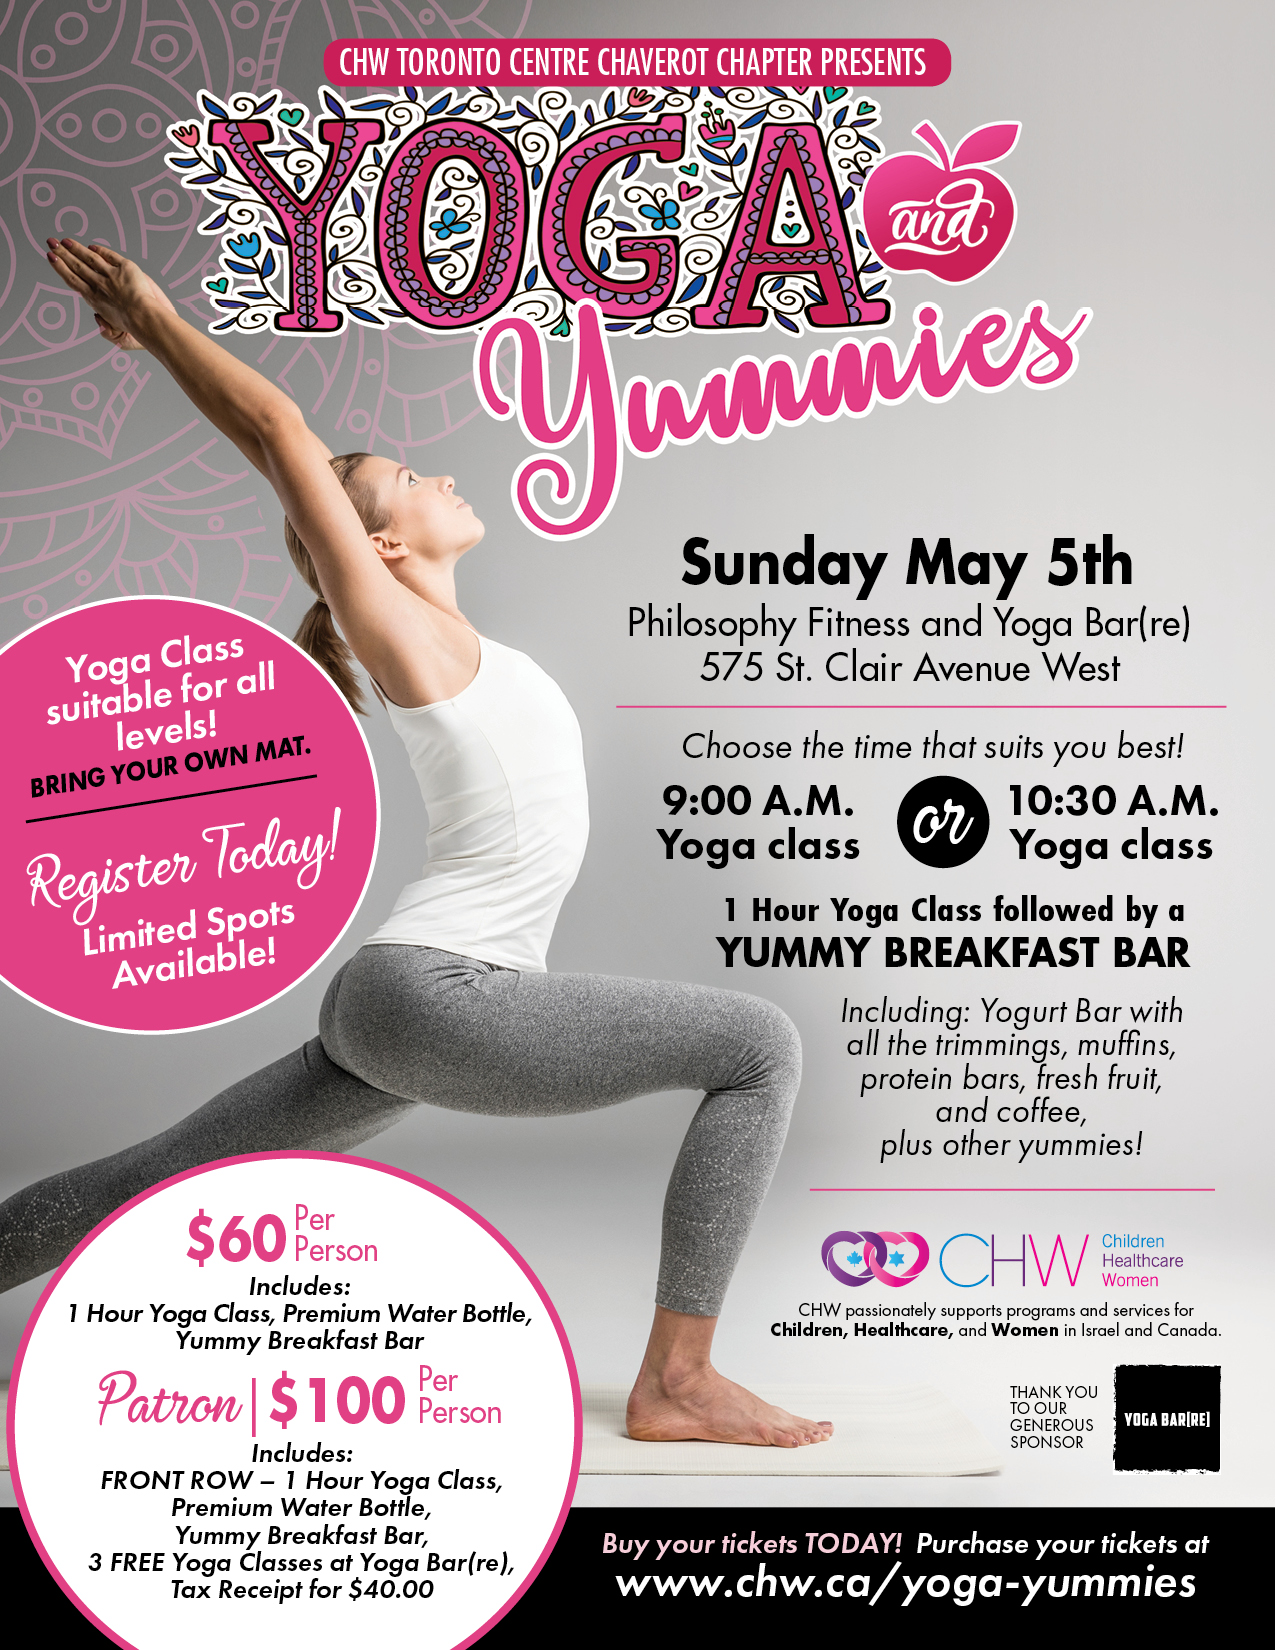 Yoga_and_Yummies flyer.jpg